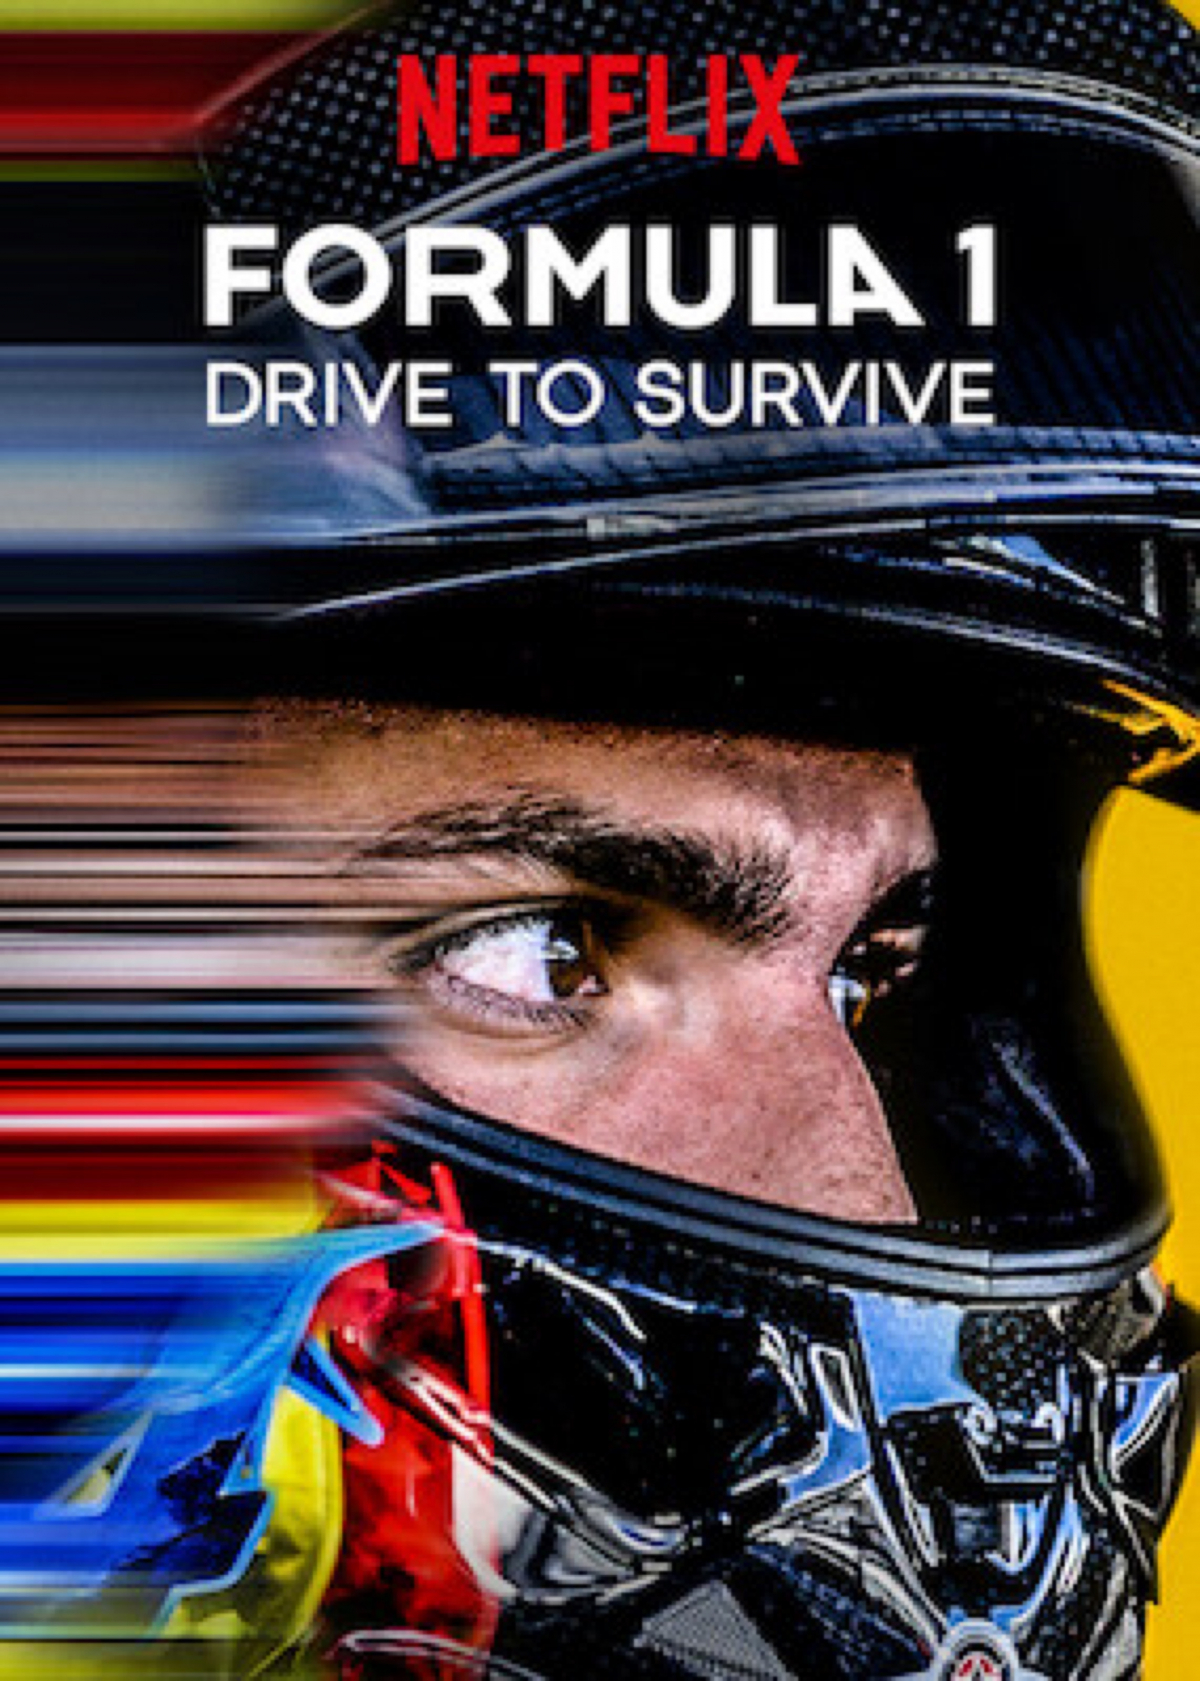 Formula 1: Drive to Survive Season 1 Epidose 4 ”The Art of War”